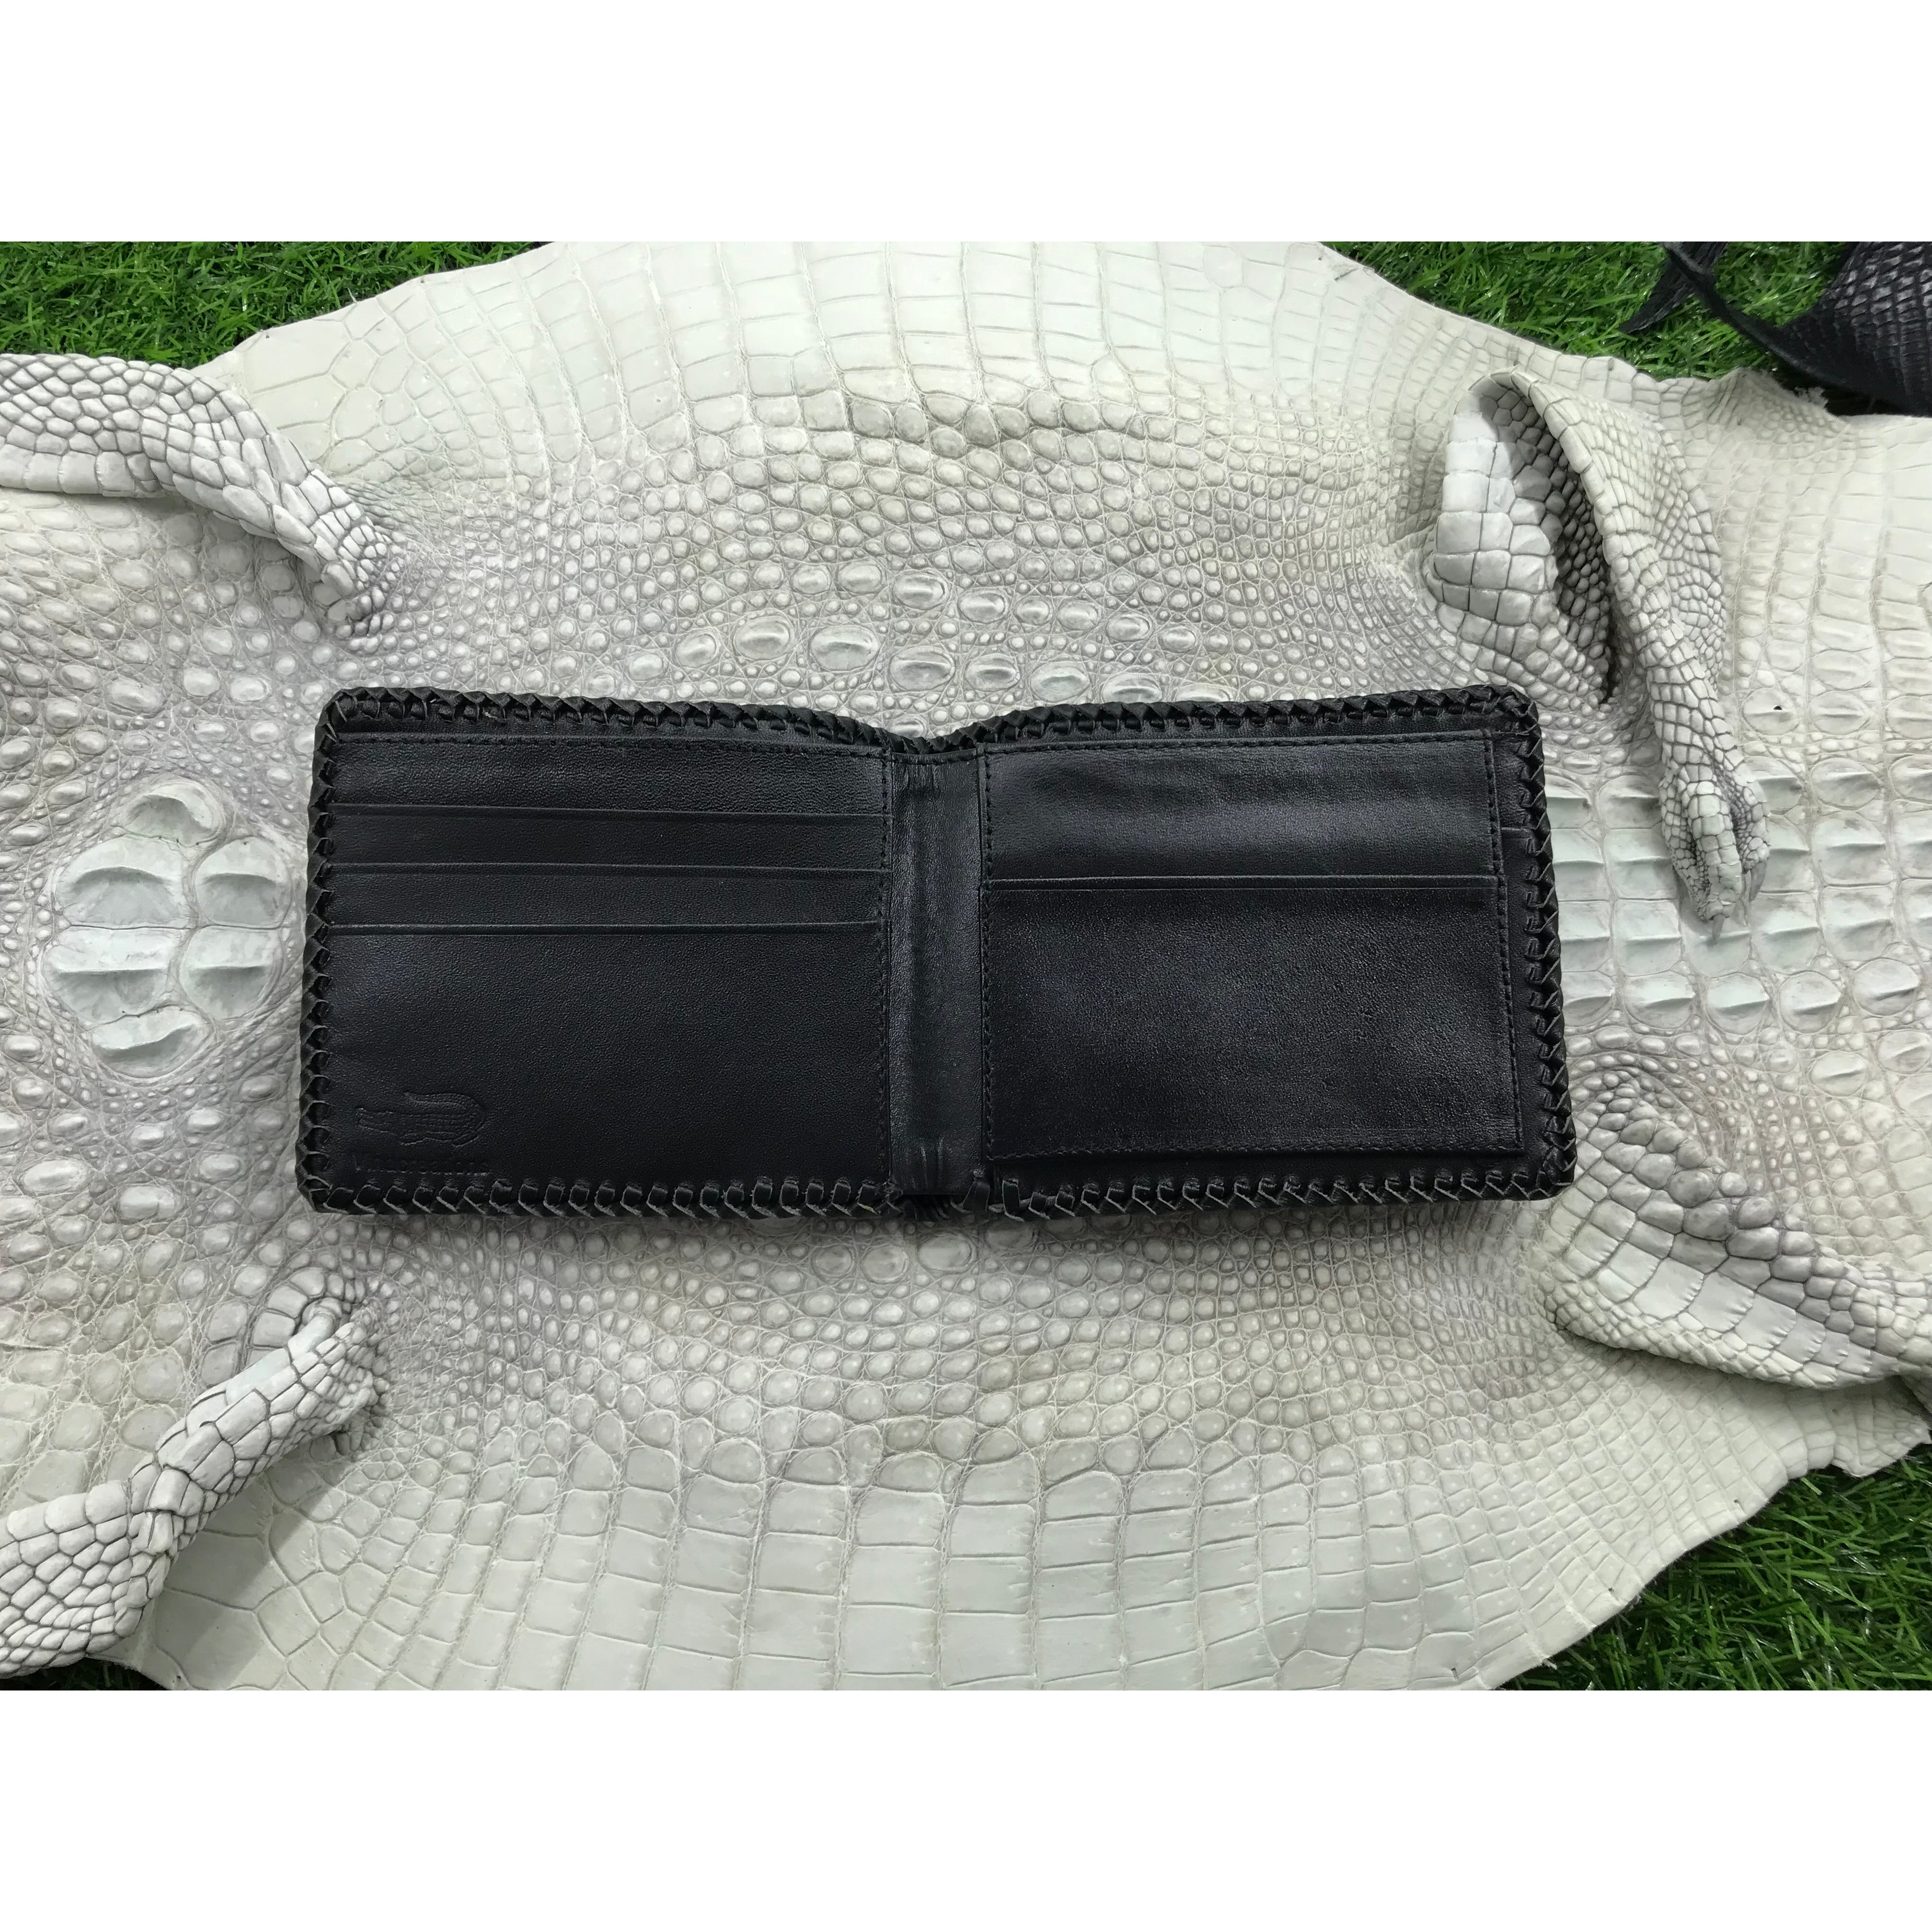 Black Alligator Skin Bifold Wallet For Men | Handmade Crocodile Leather Wallet RFID Blocking | VL4550 - Vinacreations